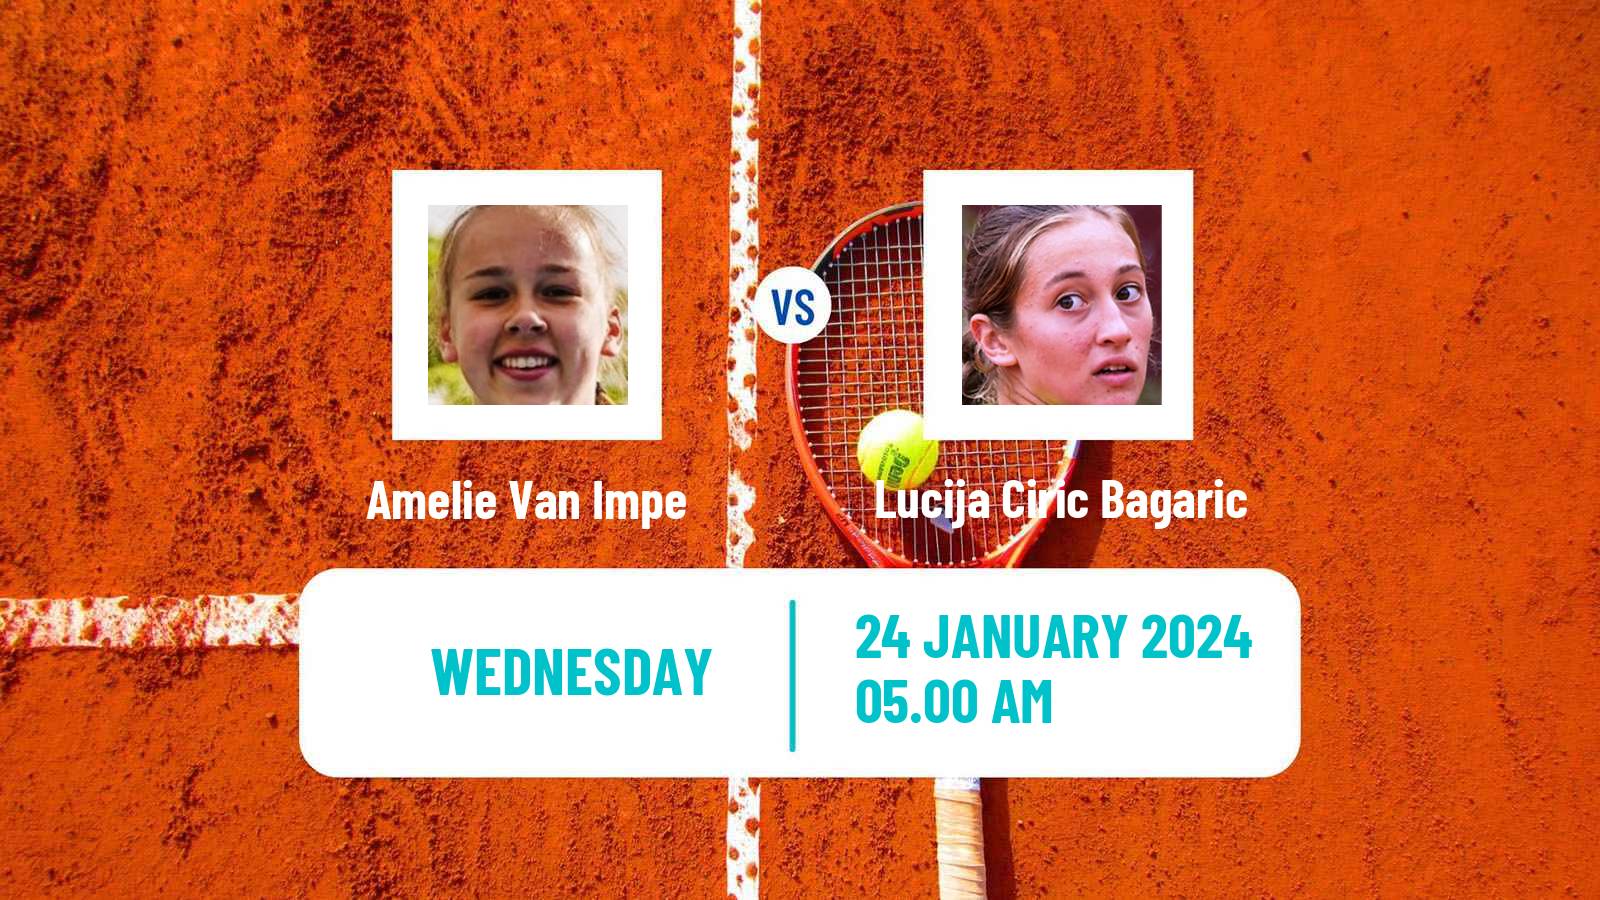 Tennis ITF W35 Monastir 2 Women Amelie Van Impe - Lucija Ciric Bagaric